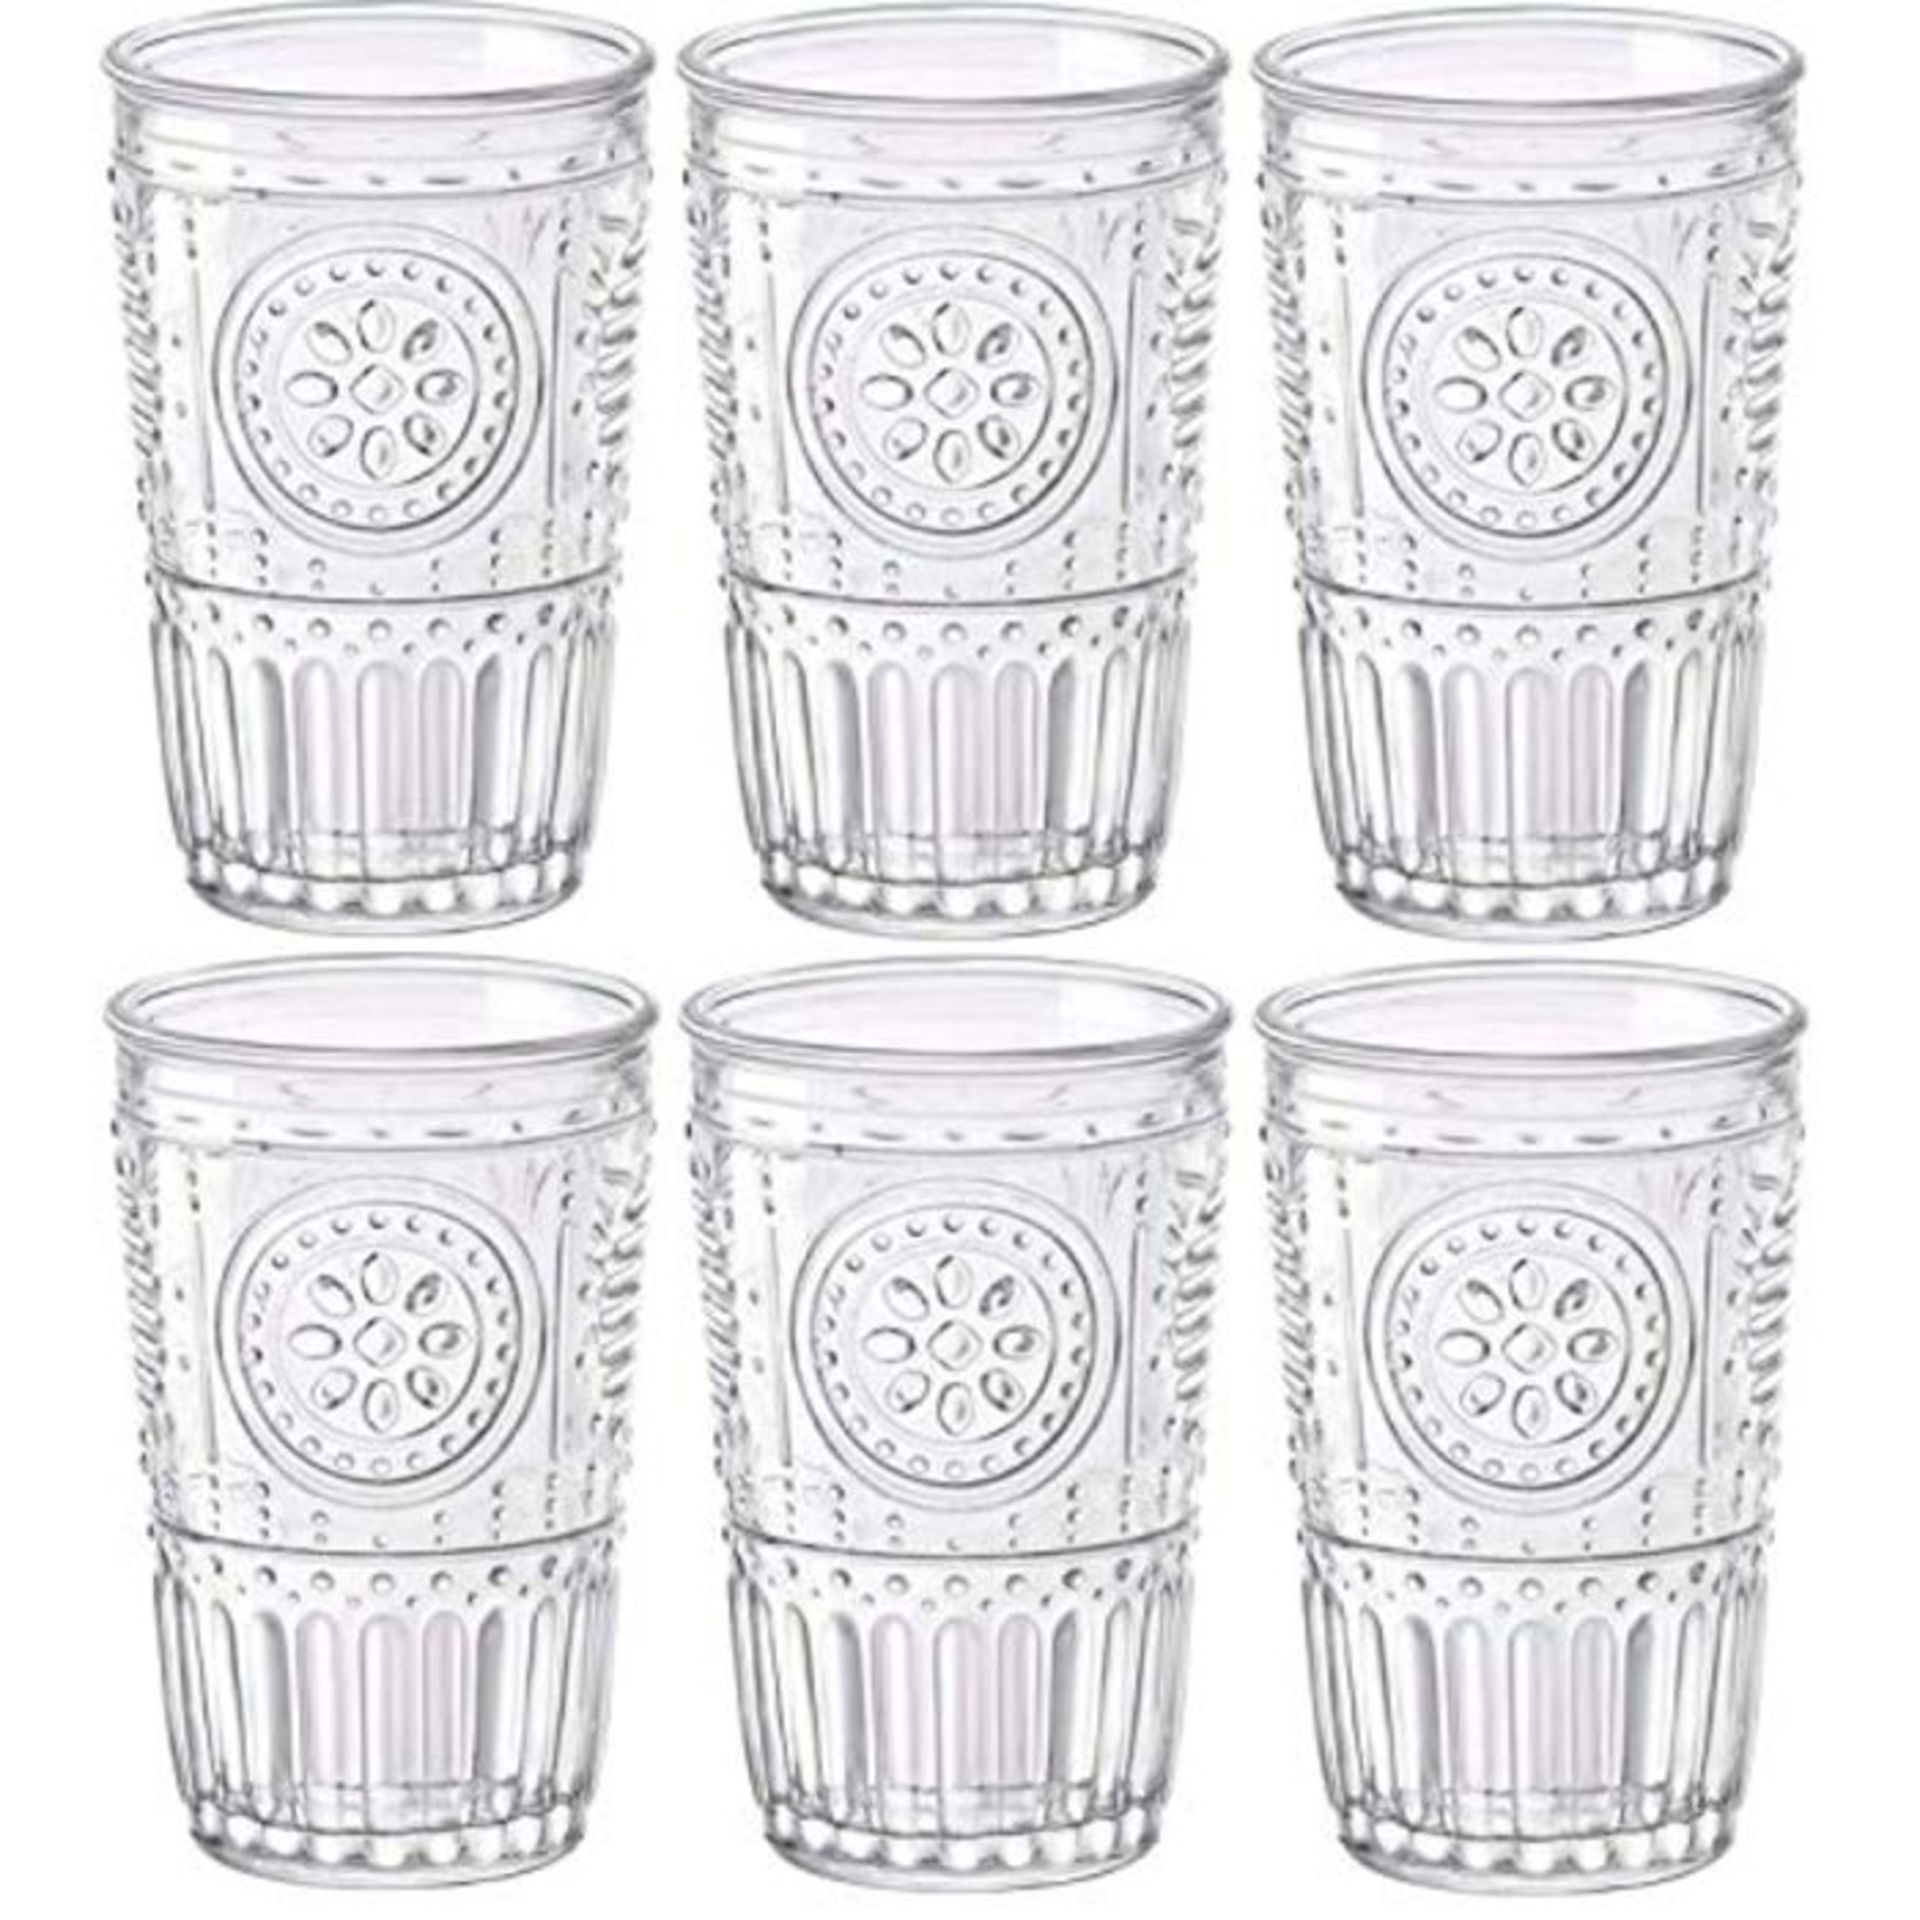 Bormioli Rocco - Romantic - Set of 6 Glasses - 30.5cl - Clear Glass - 8 x 8 x 12.5cm/3